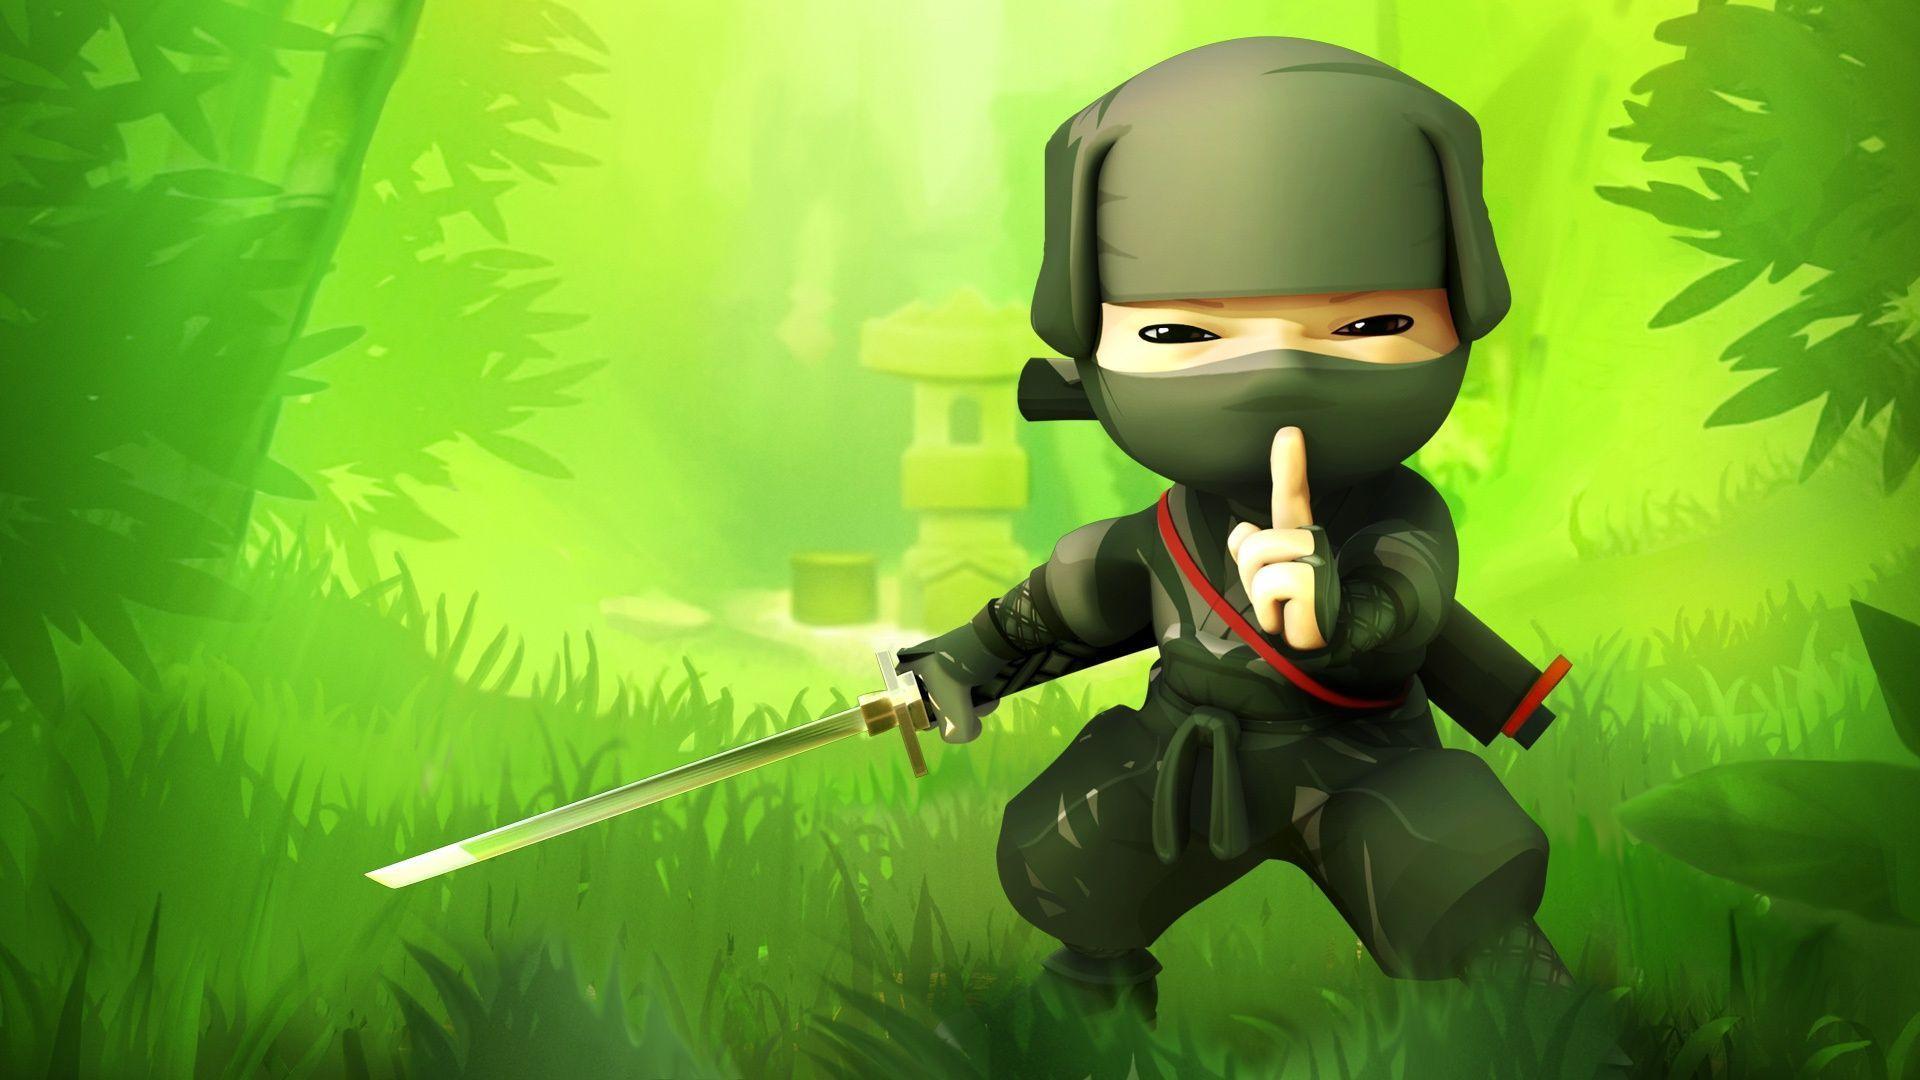 Ninja in Mini Ninjas HD desktop wallpaper, Widescreen, High